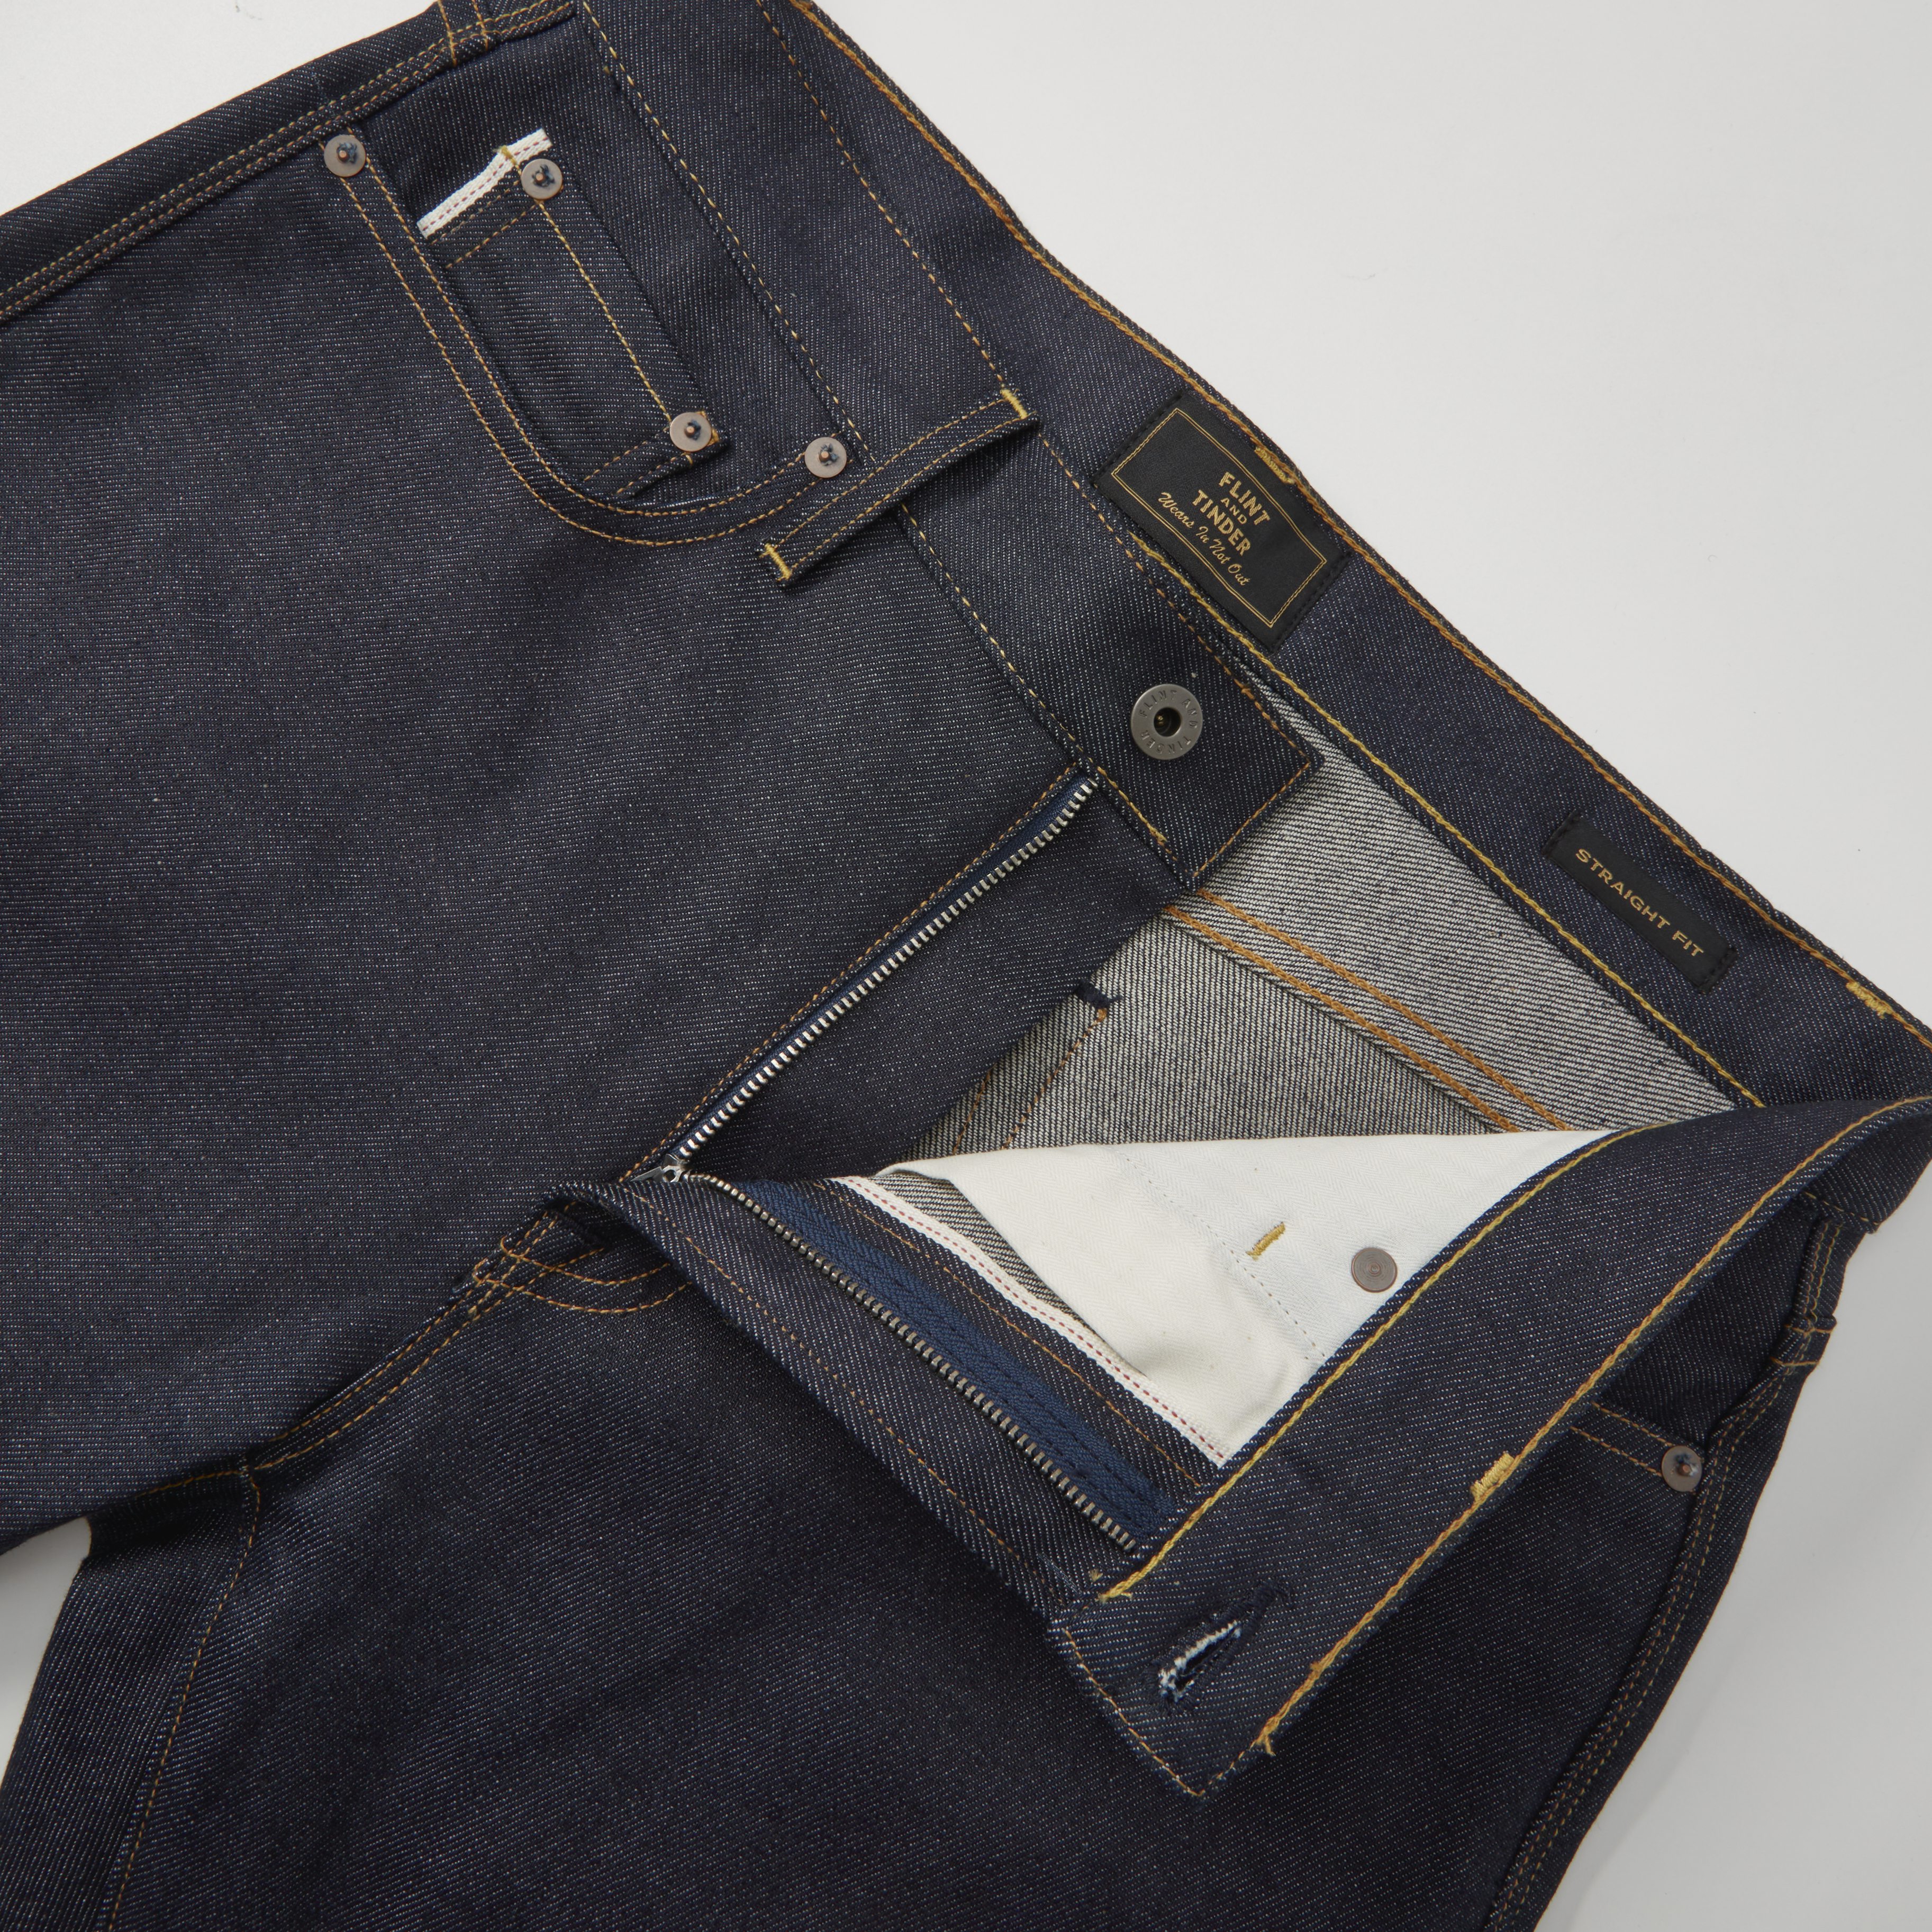 Review) Korra Jeans: Making Custom, Raw Selvedge Denim in India